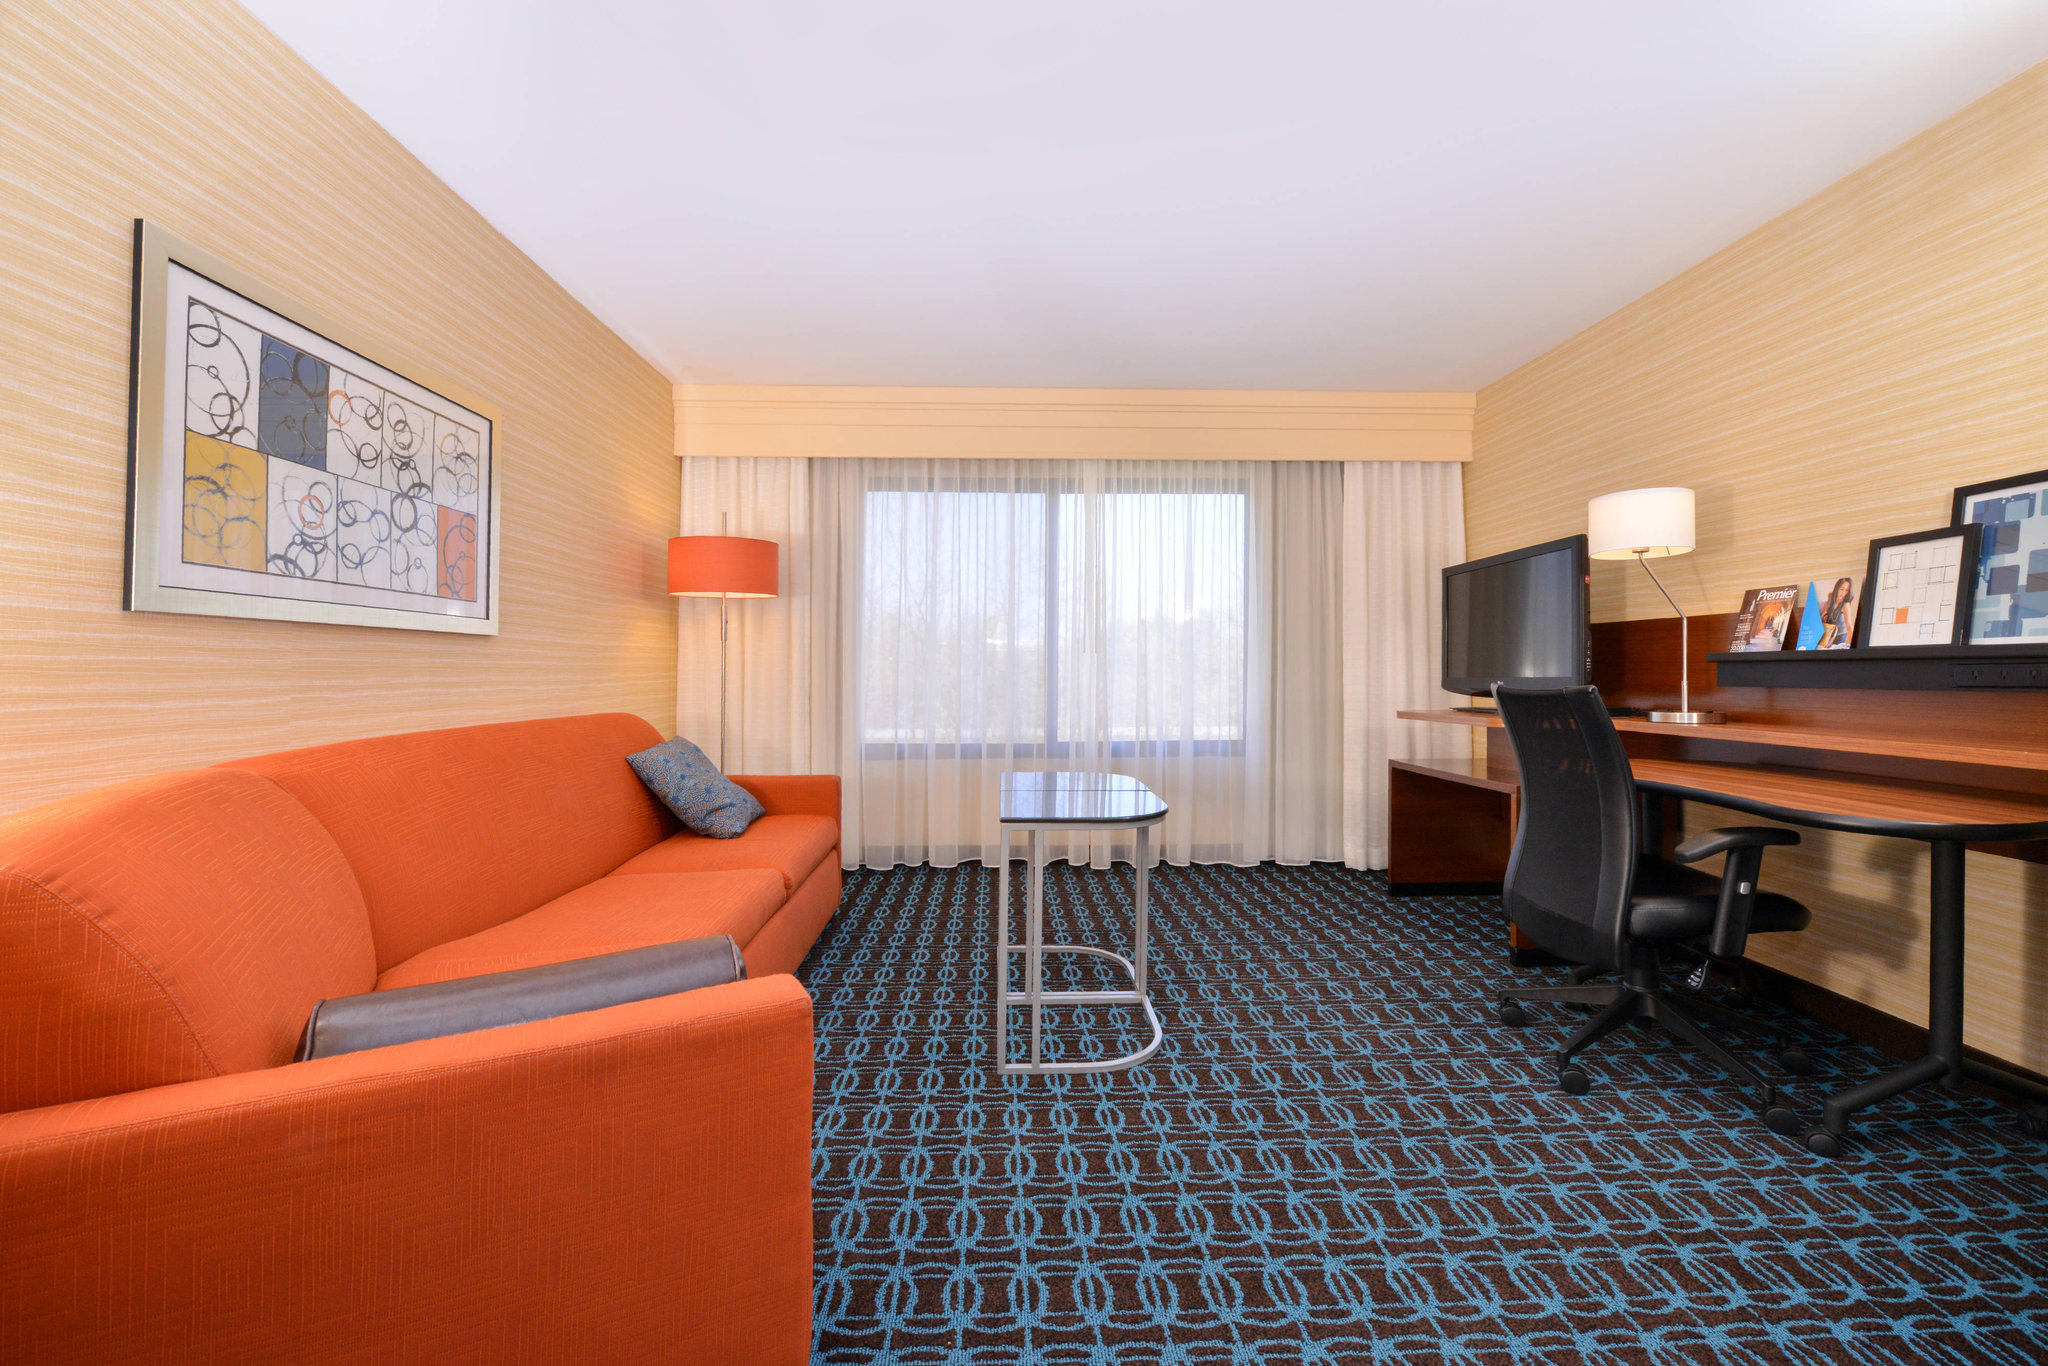 Fairfield Inn & Suites by Marriott Rochester West/Greece Photo